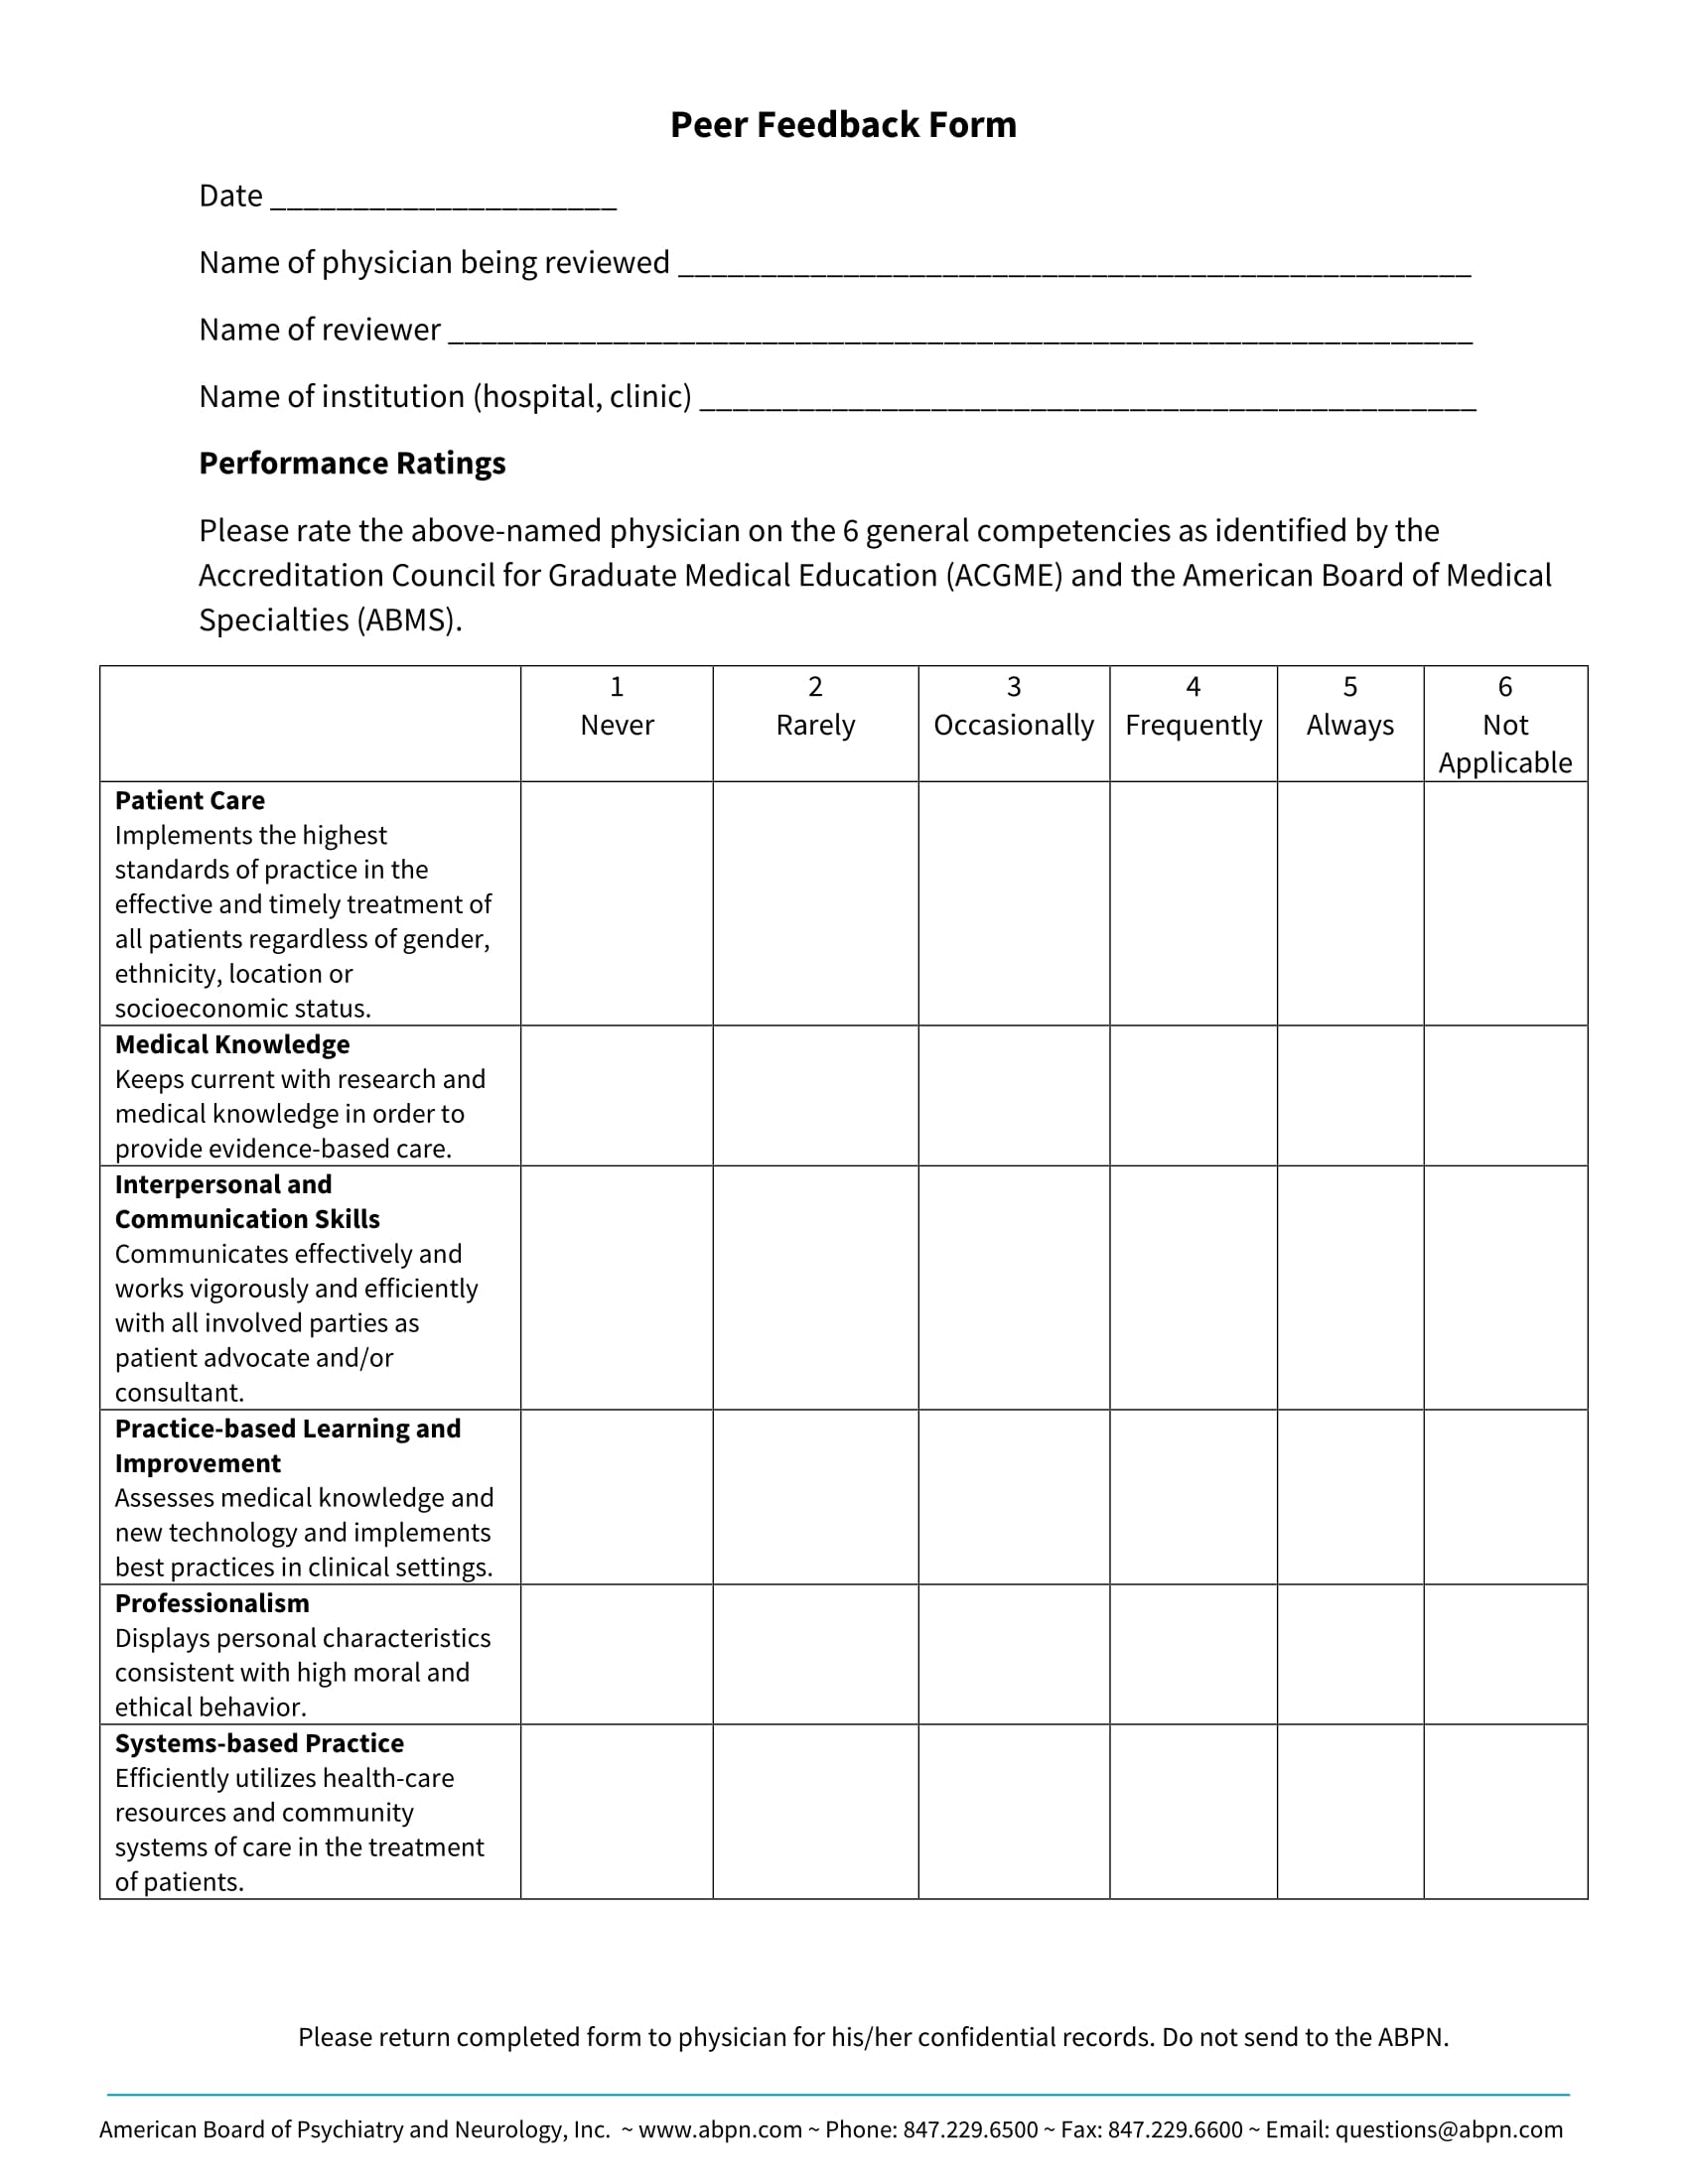 peer feedback and improvement form 2